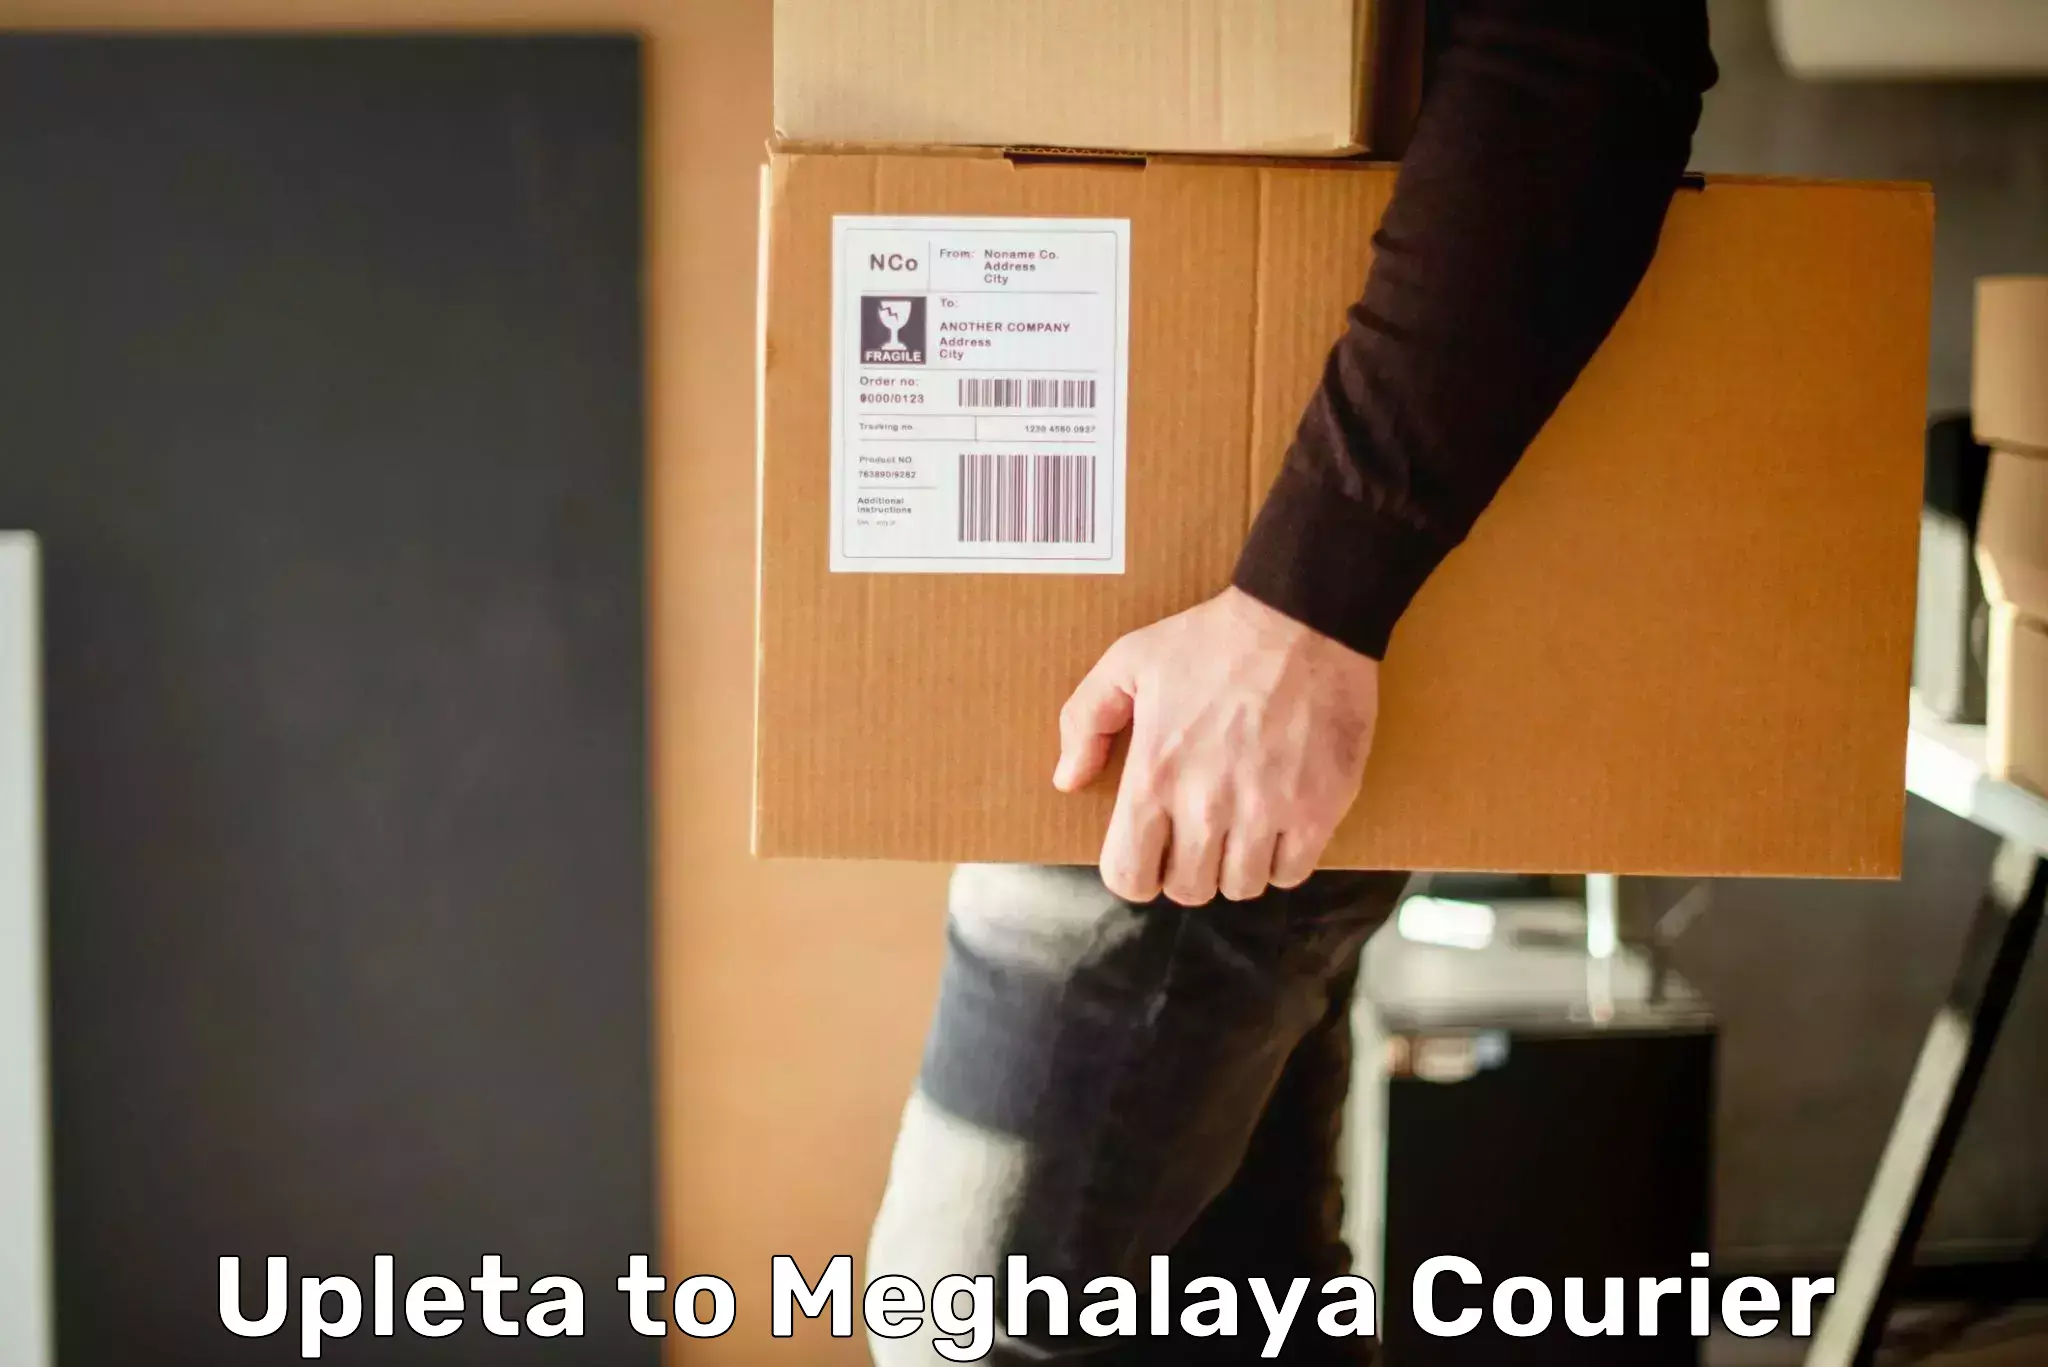 Next-day freight services Upleta to Meghalaya